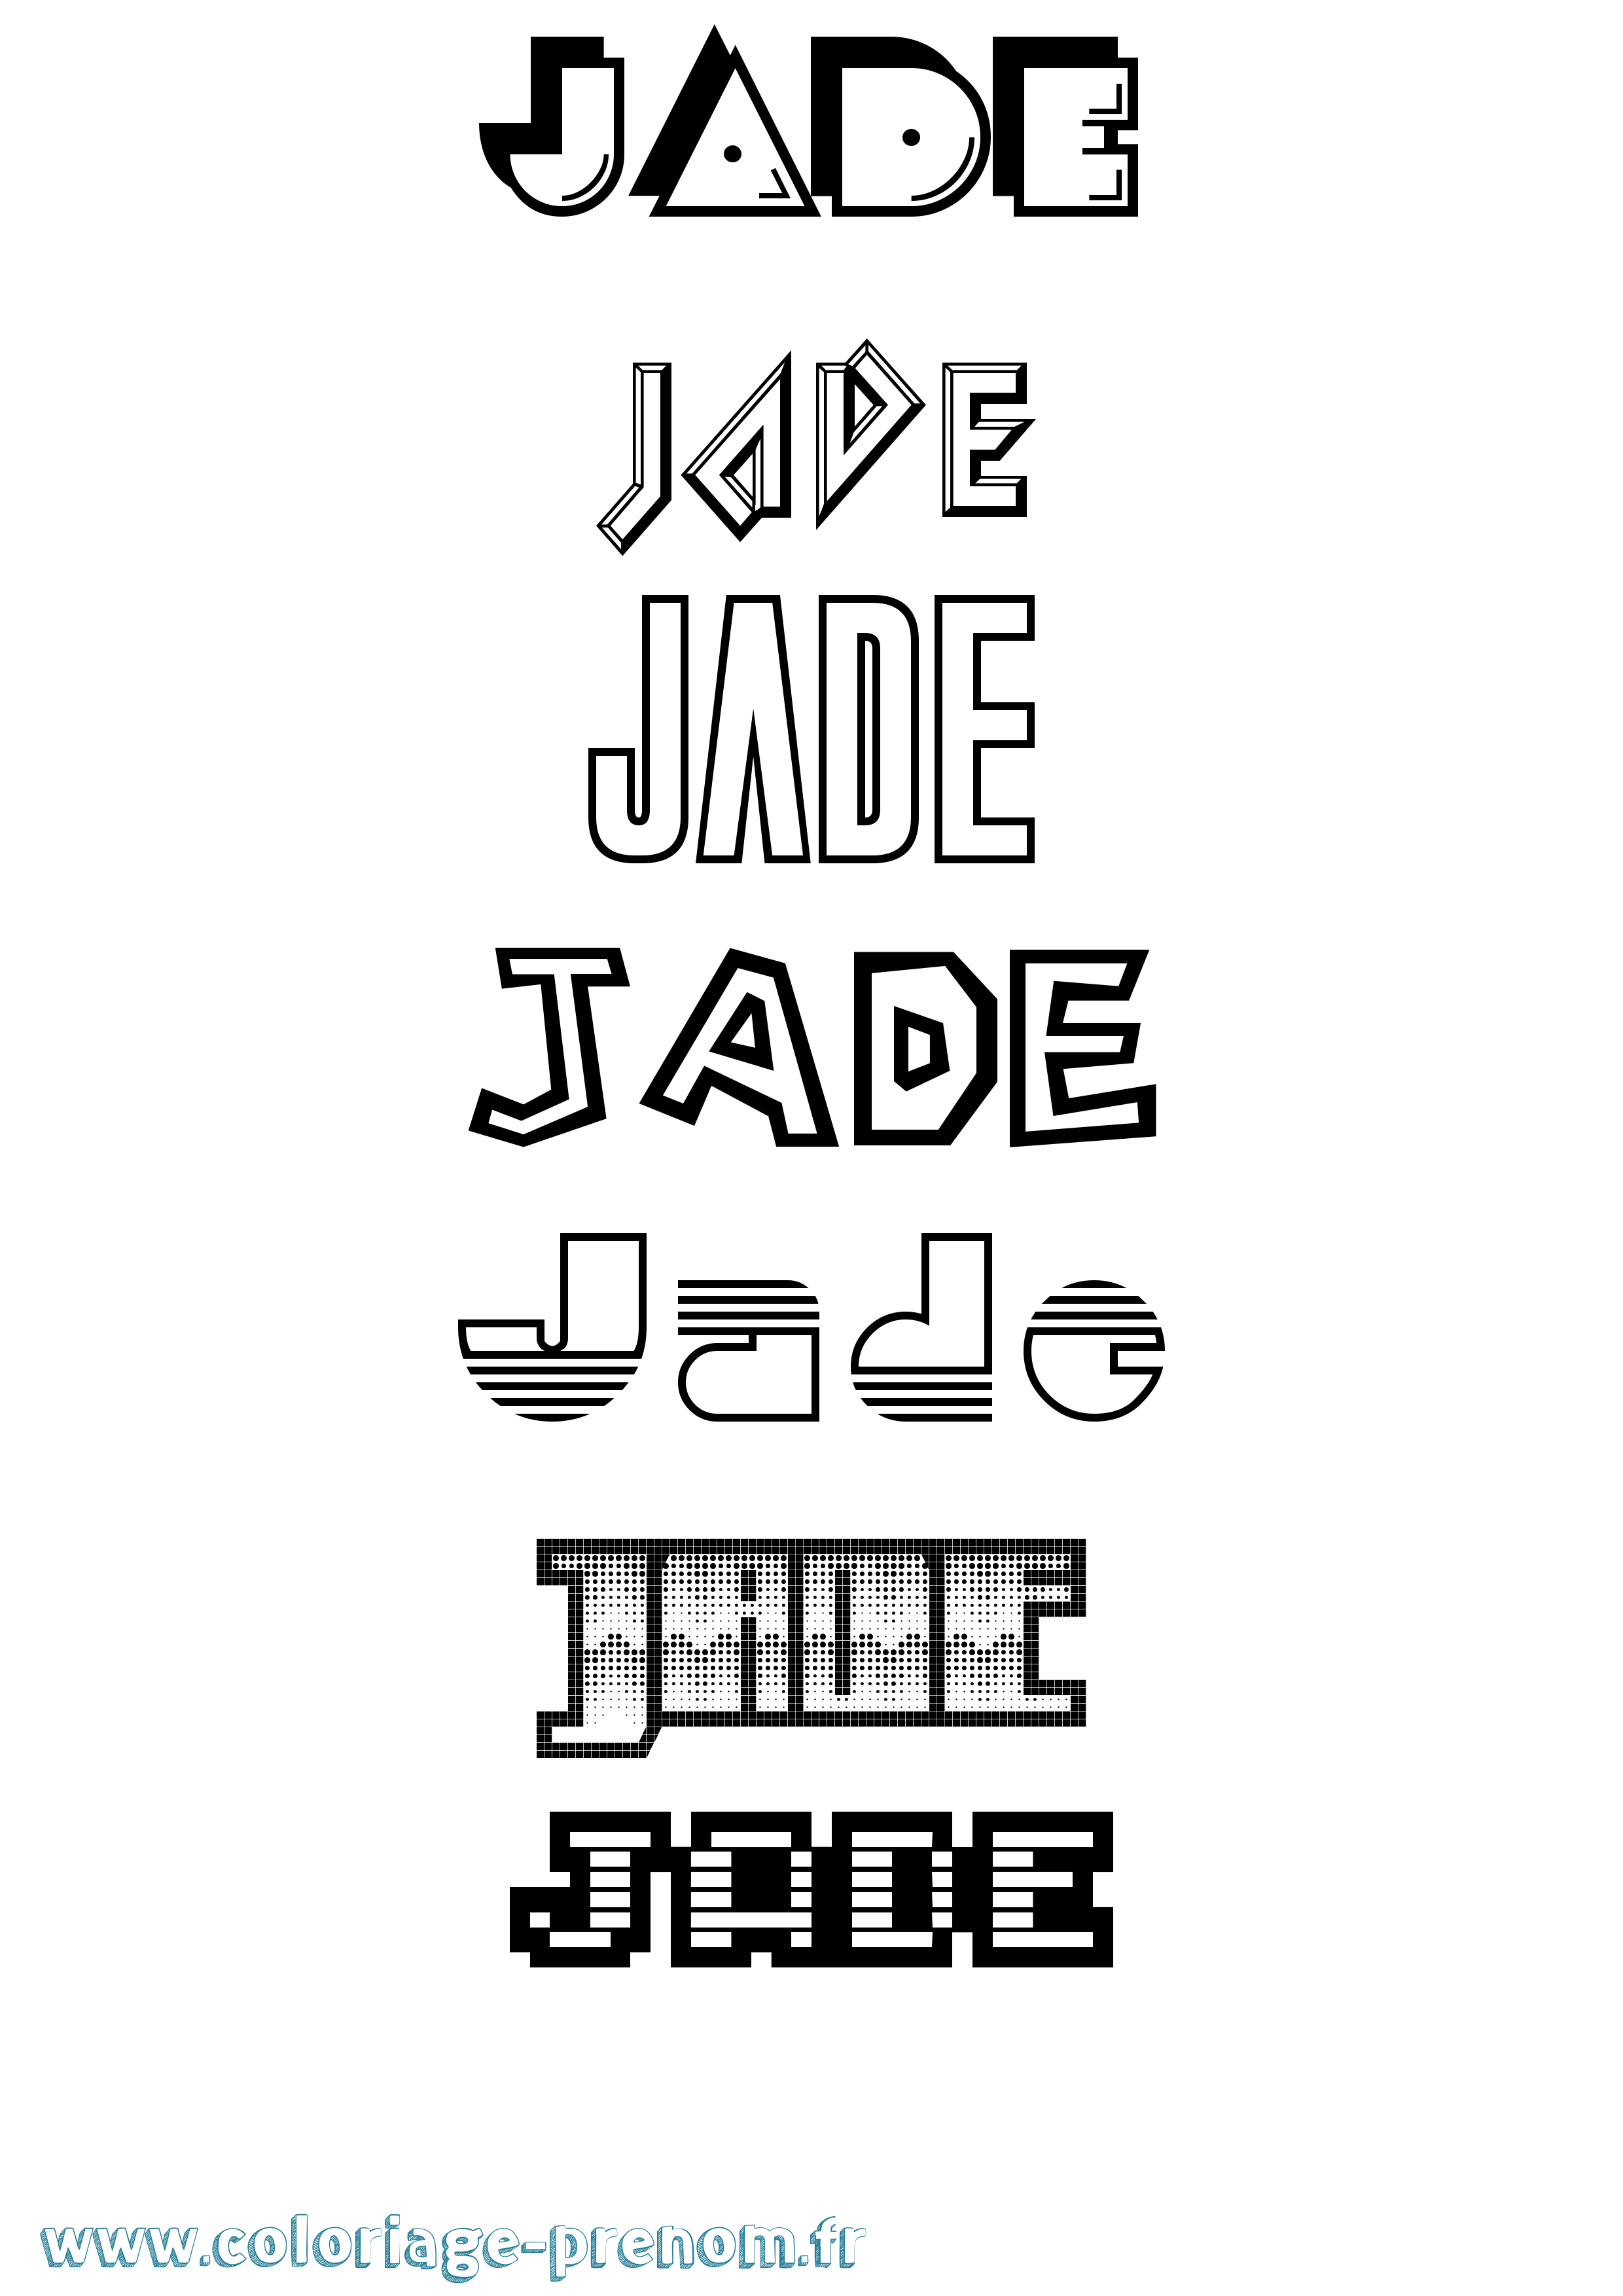 Coloriage prénom Jade